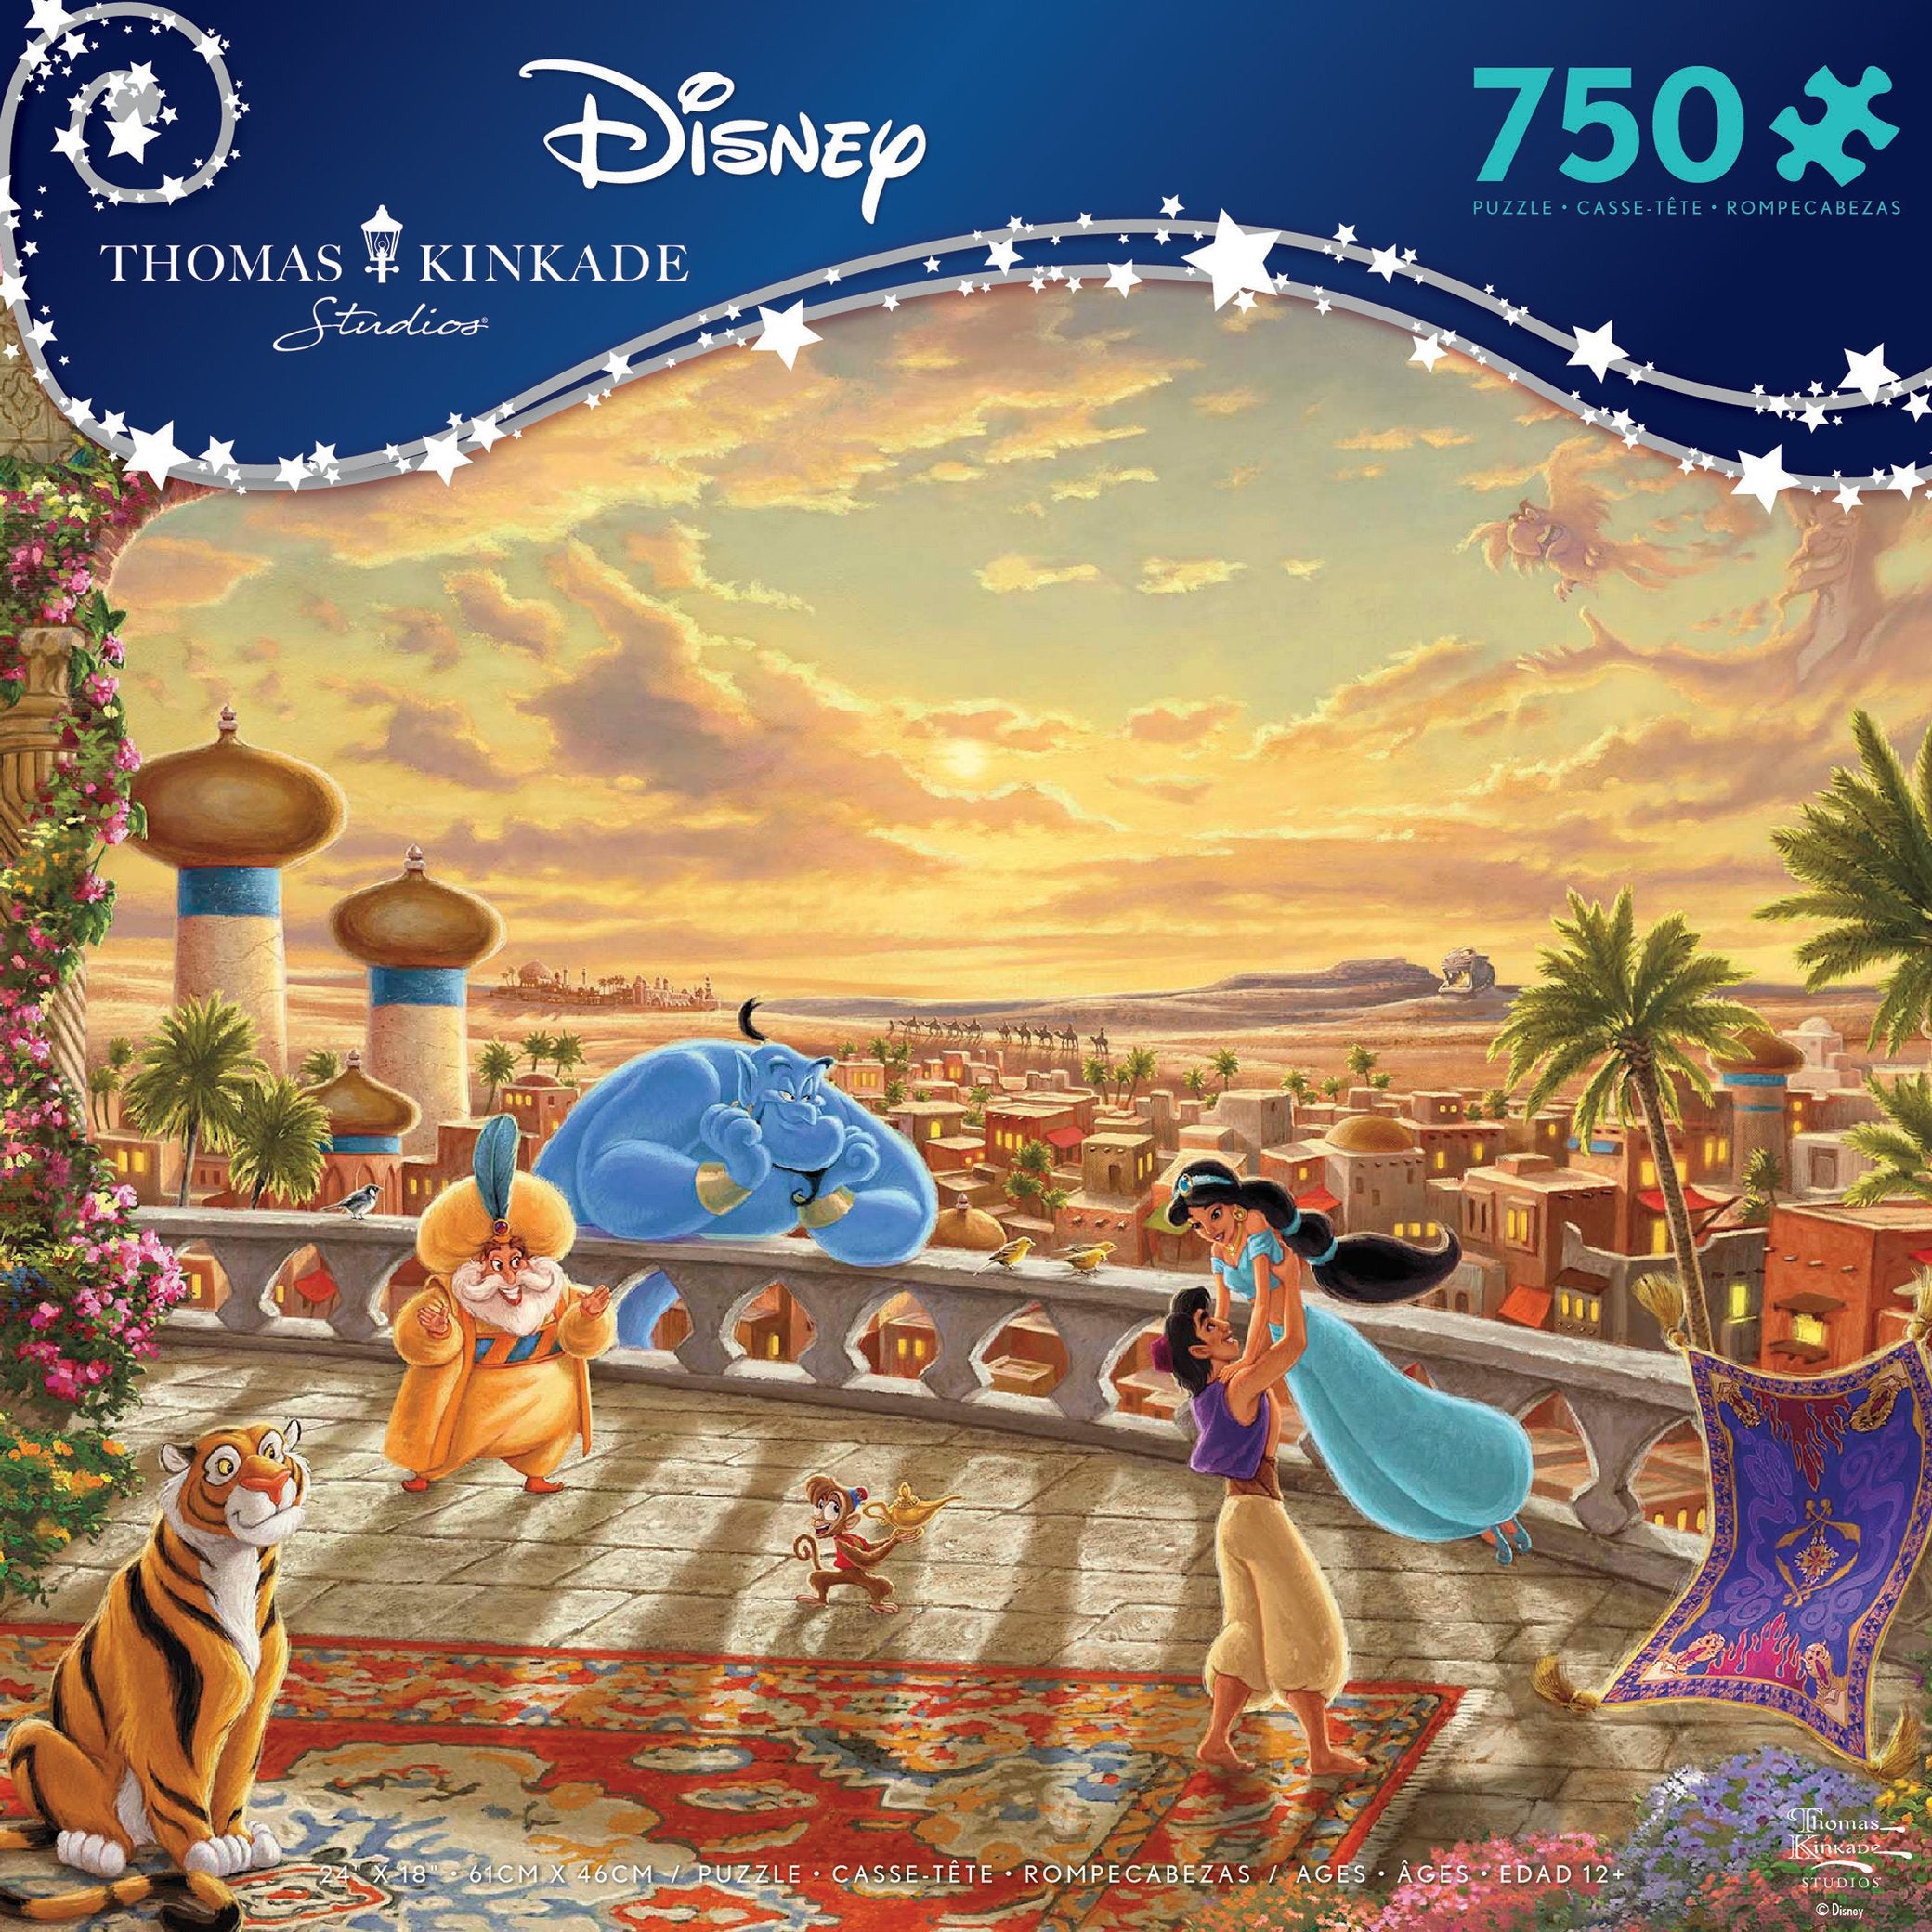 Thomas Kinkade Disney Dreams - Cinderella Dancing in the Starlight - 2